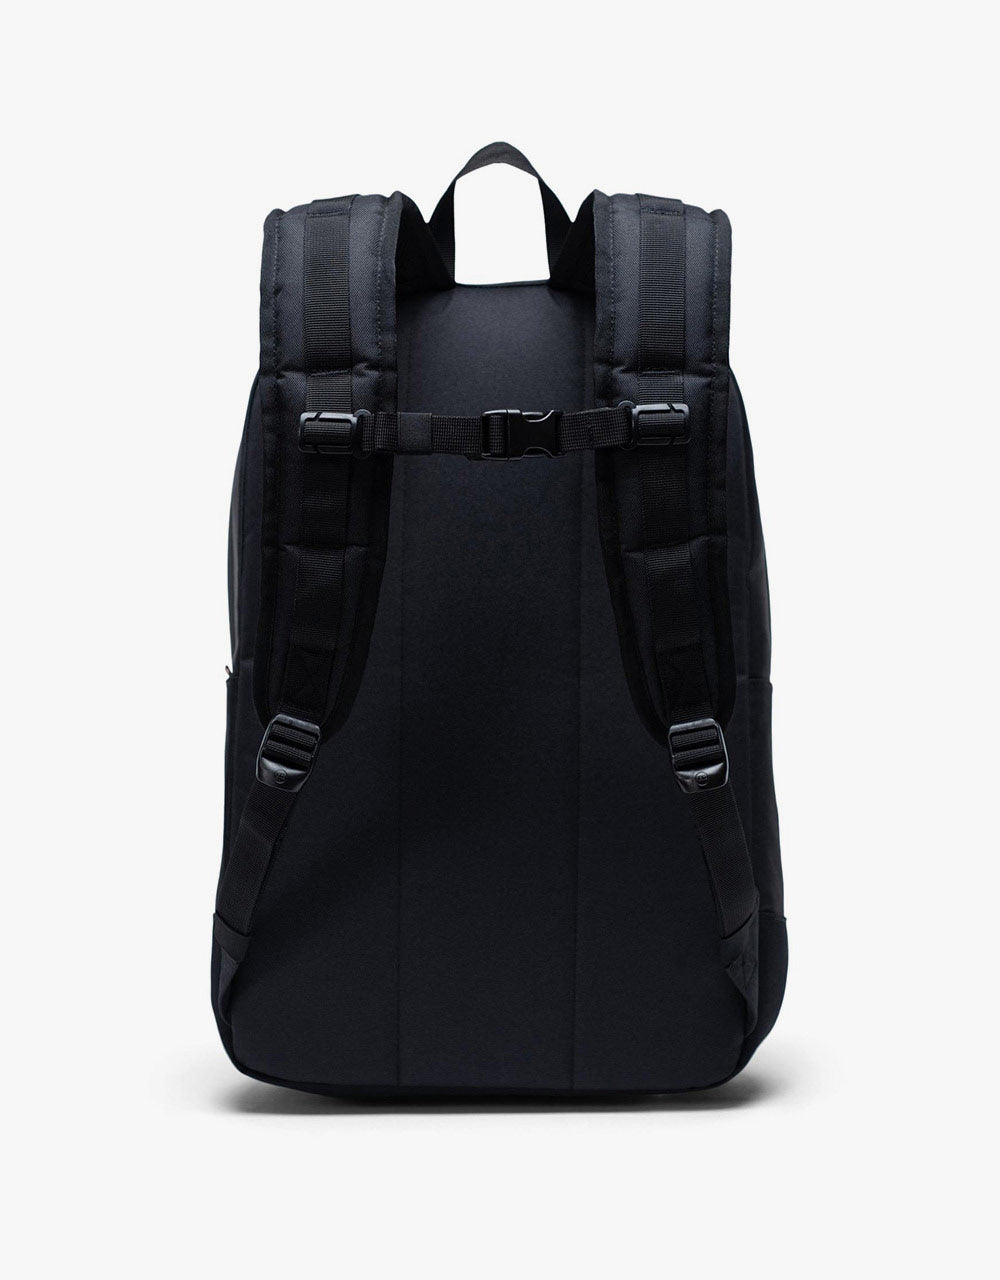 Herschel Supply Co. Kaine Backpack - Black/Tile Blue/Raspberry